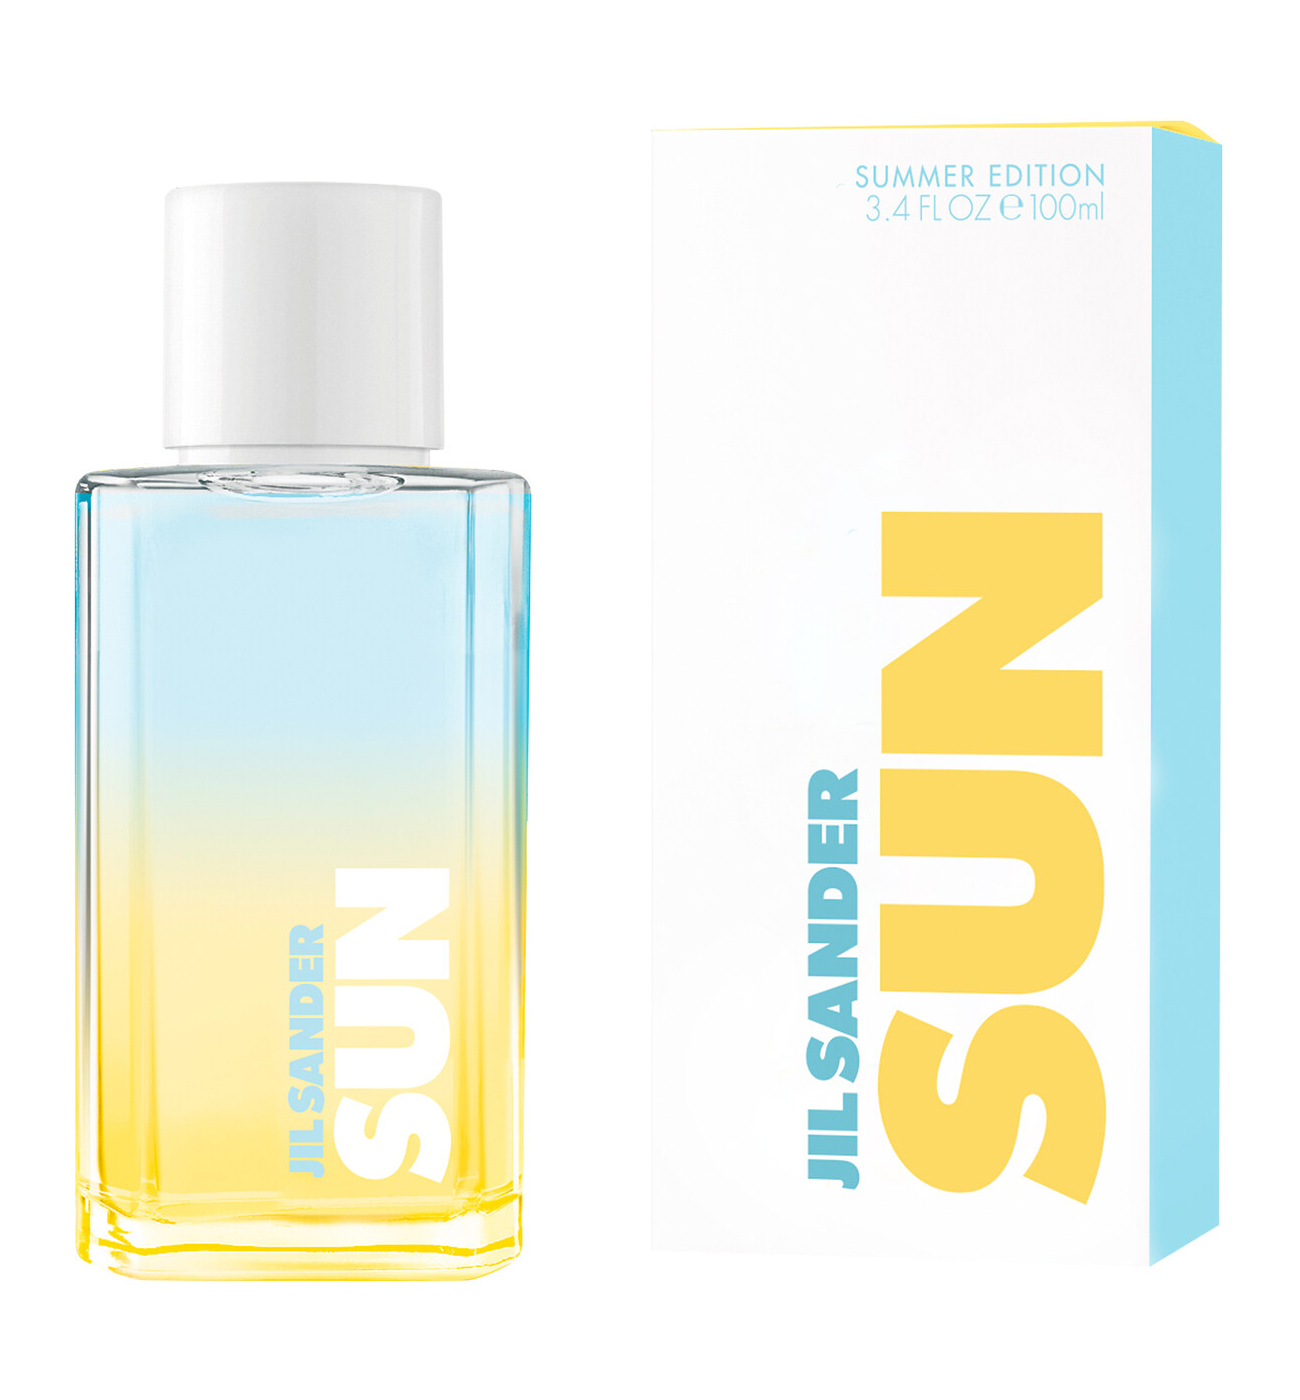 Jil Sander Sun Summer Limited Editions 2020 ~ New Fragrances